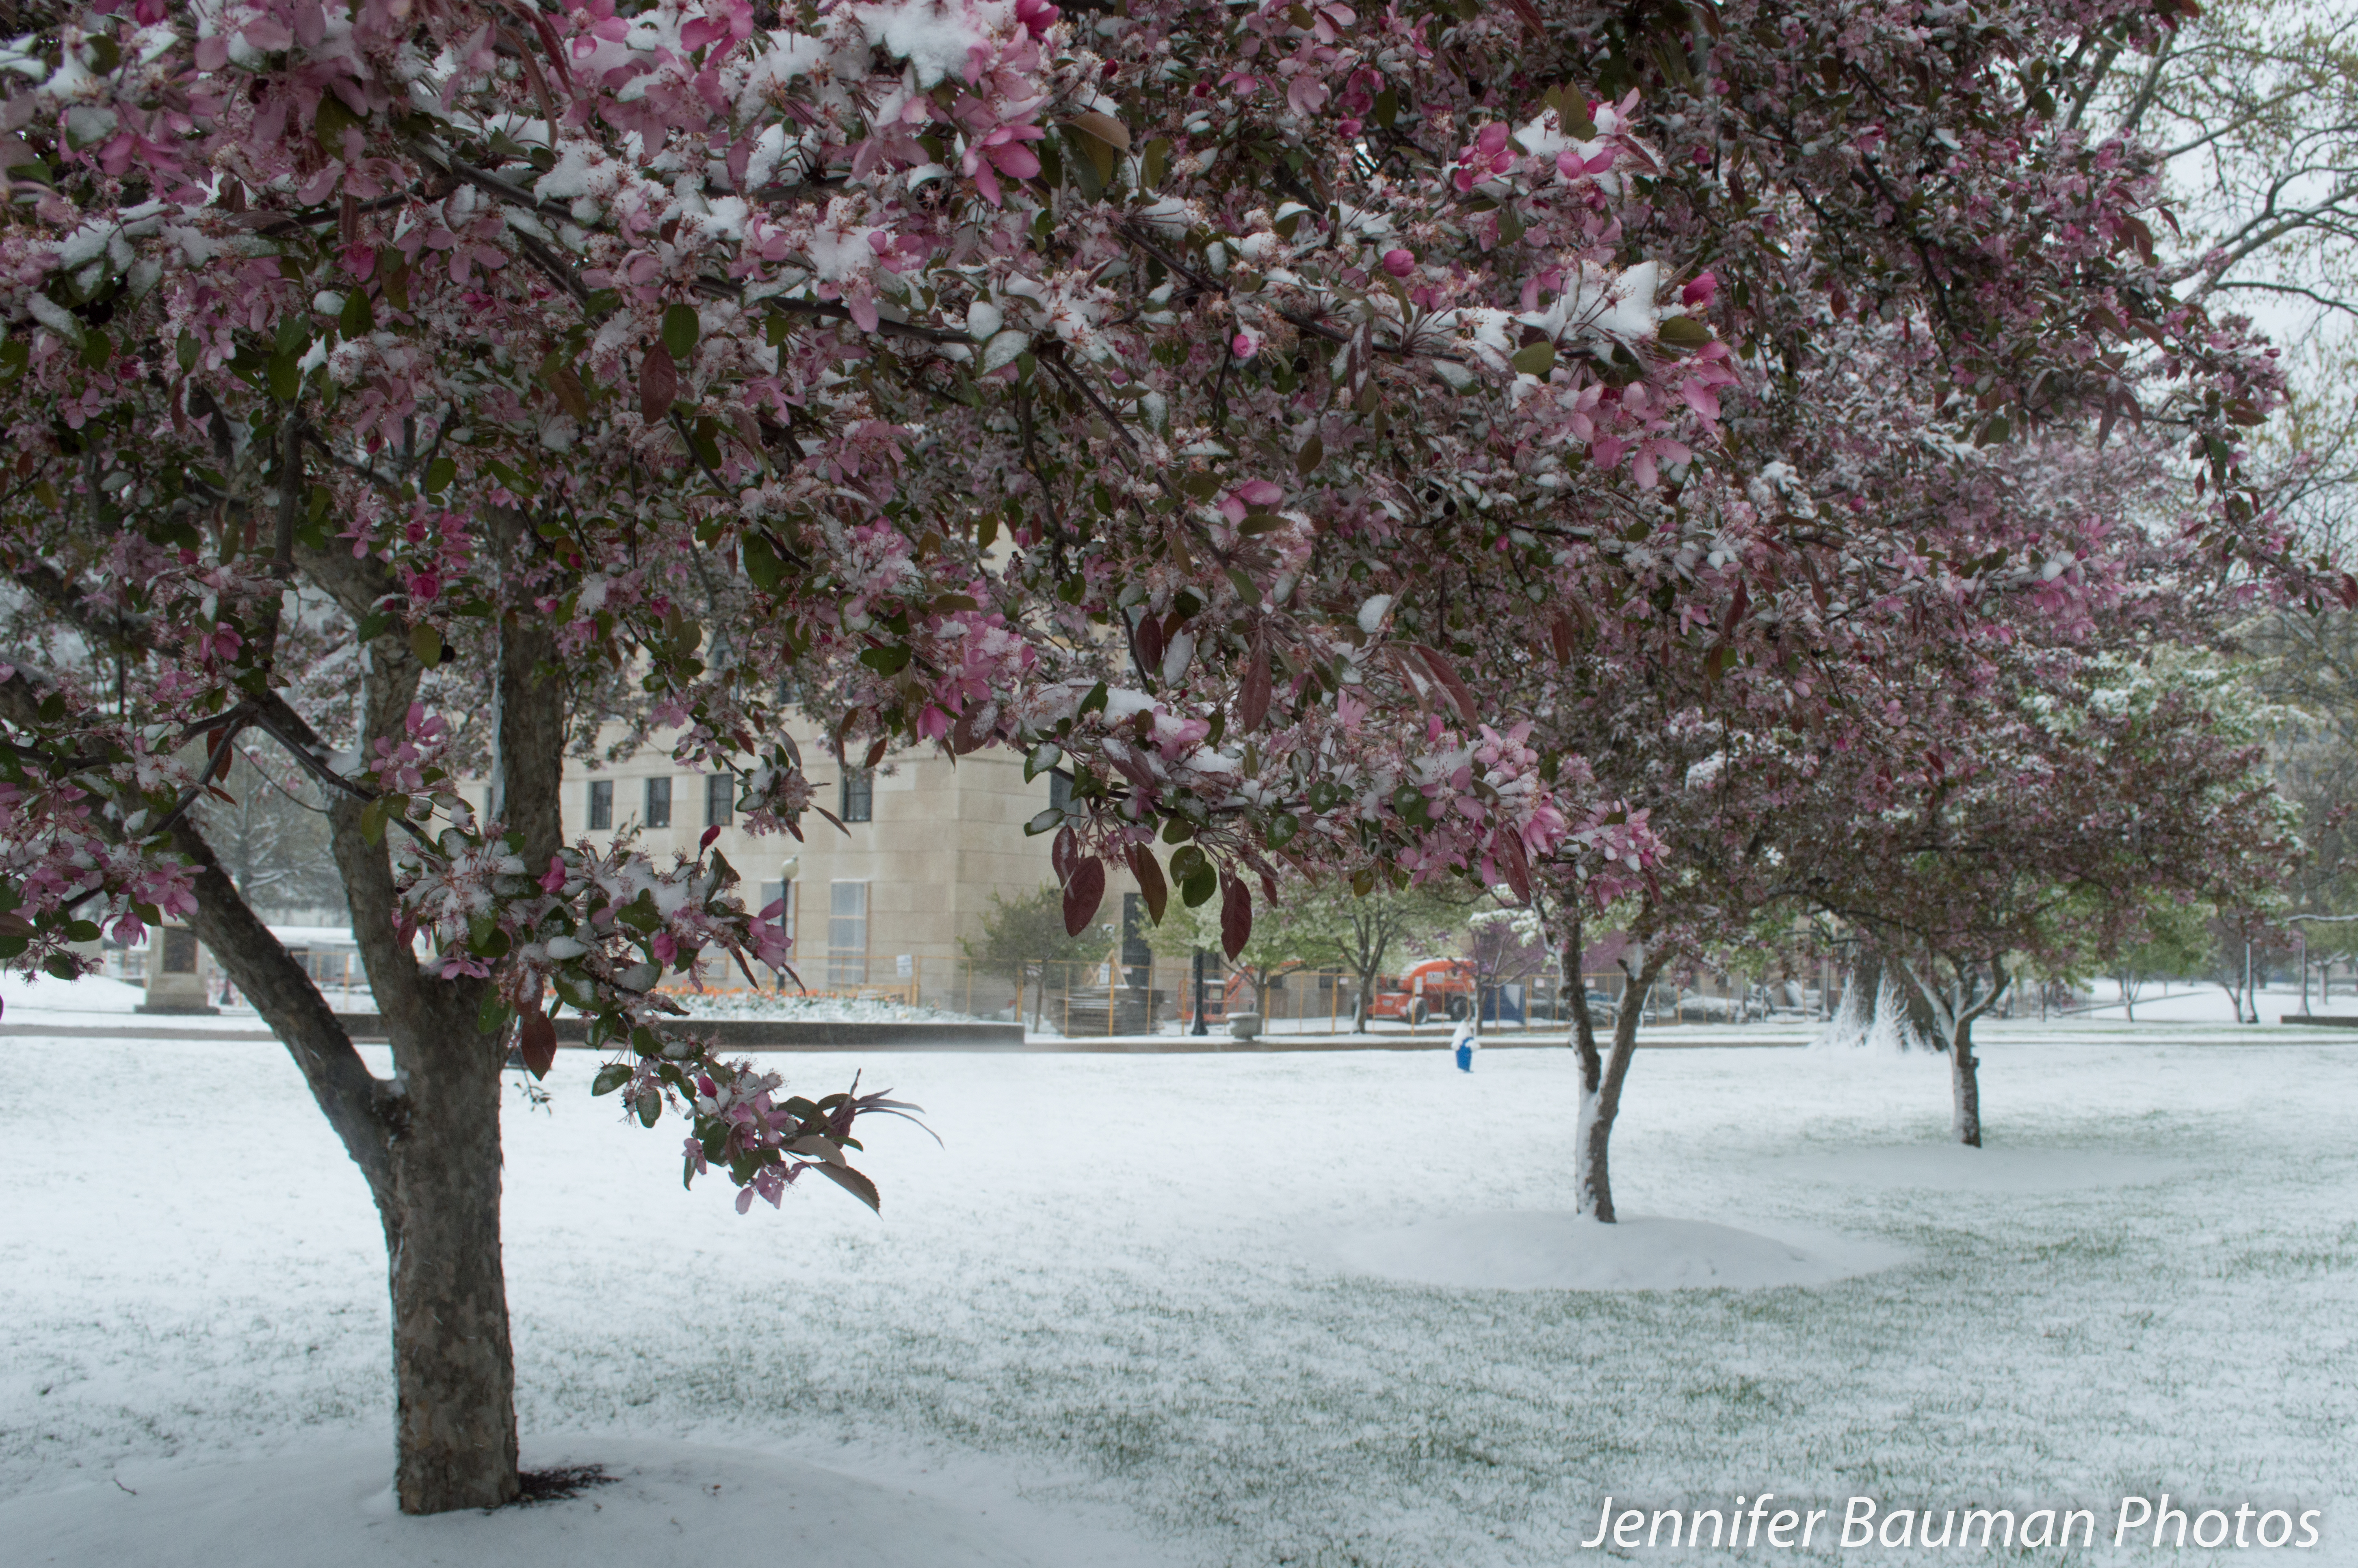 Is It Spring Yet? - Jennifer Bauman Photos